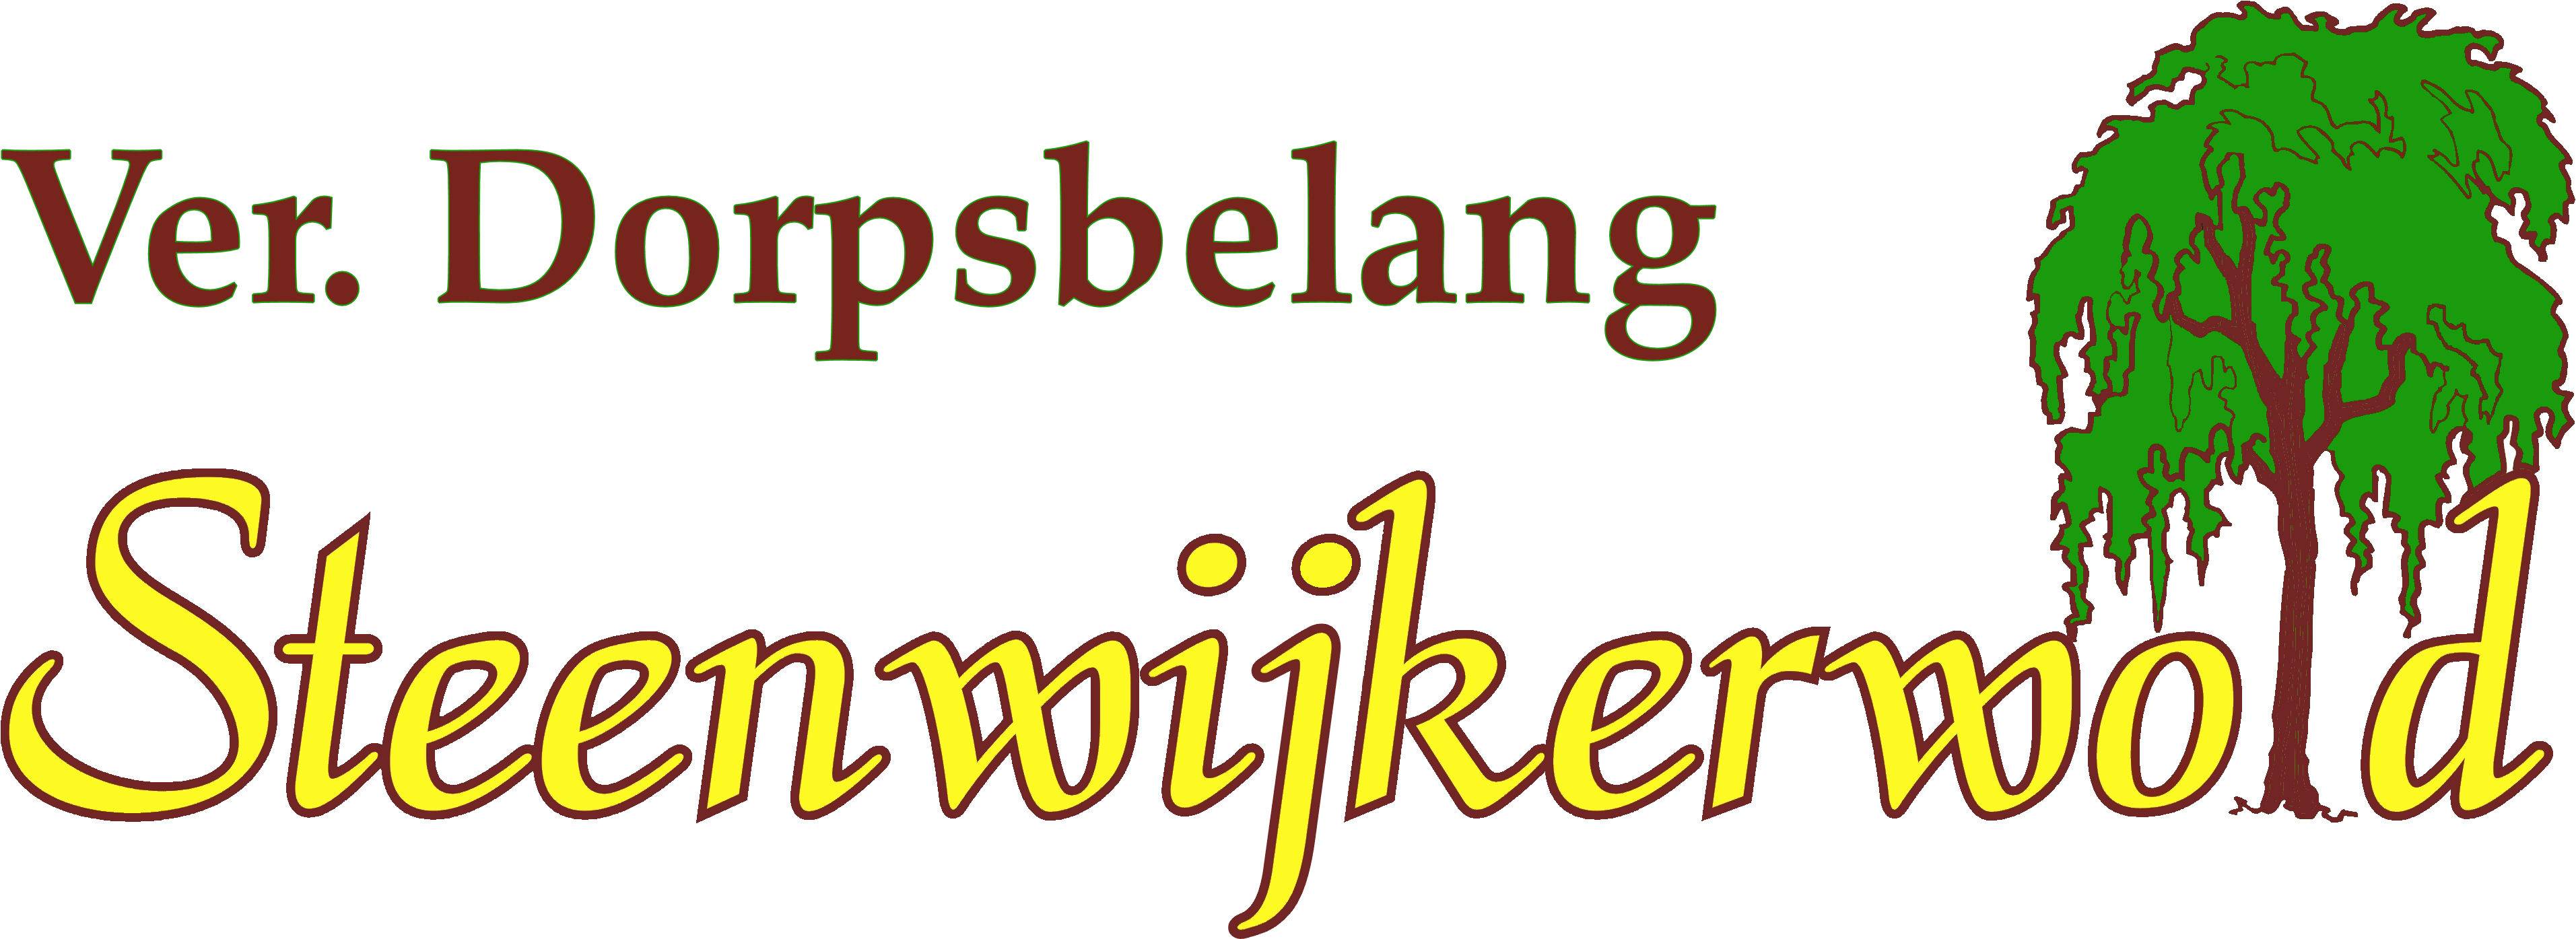 20101216101713-039_logo dorpsbelang